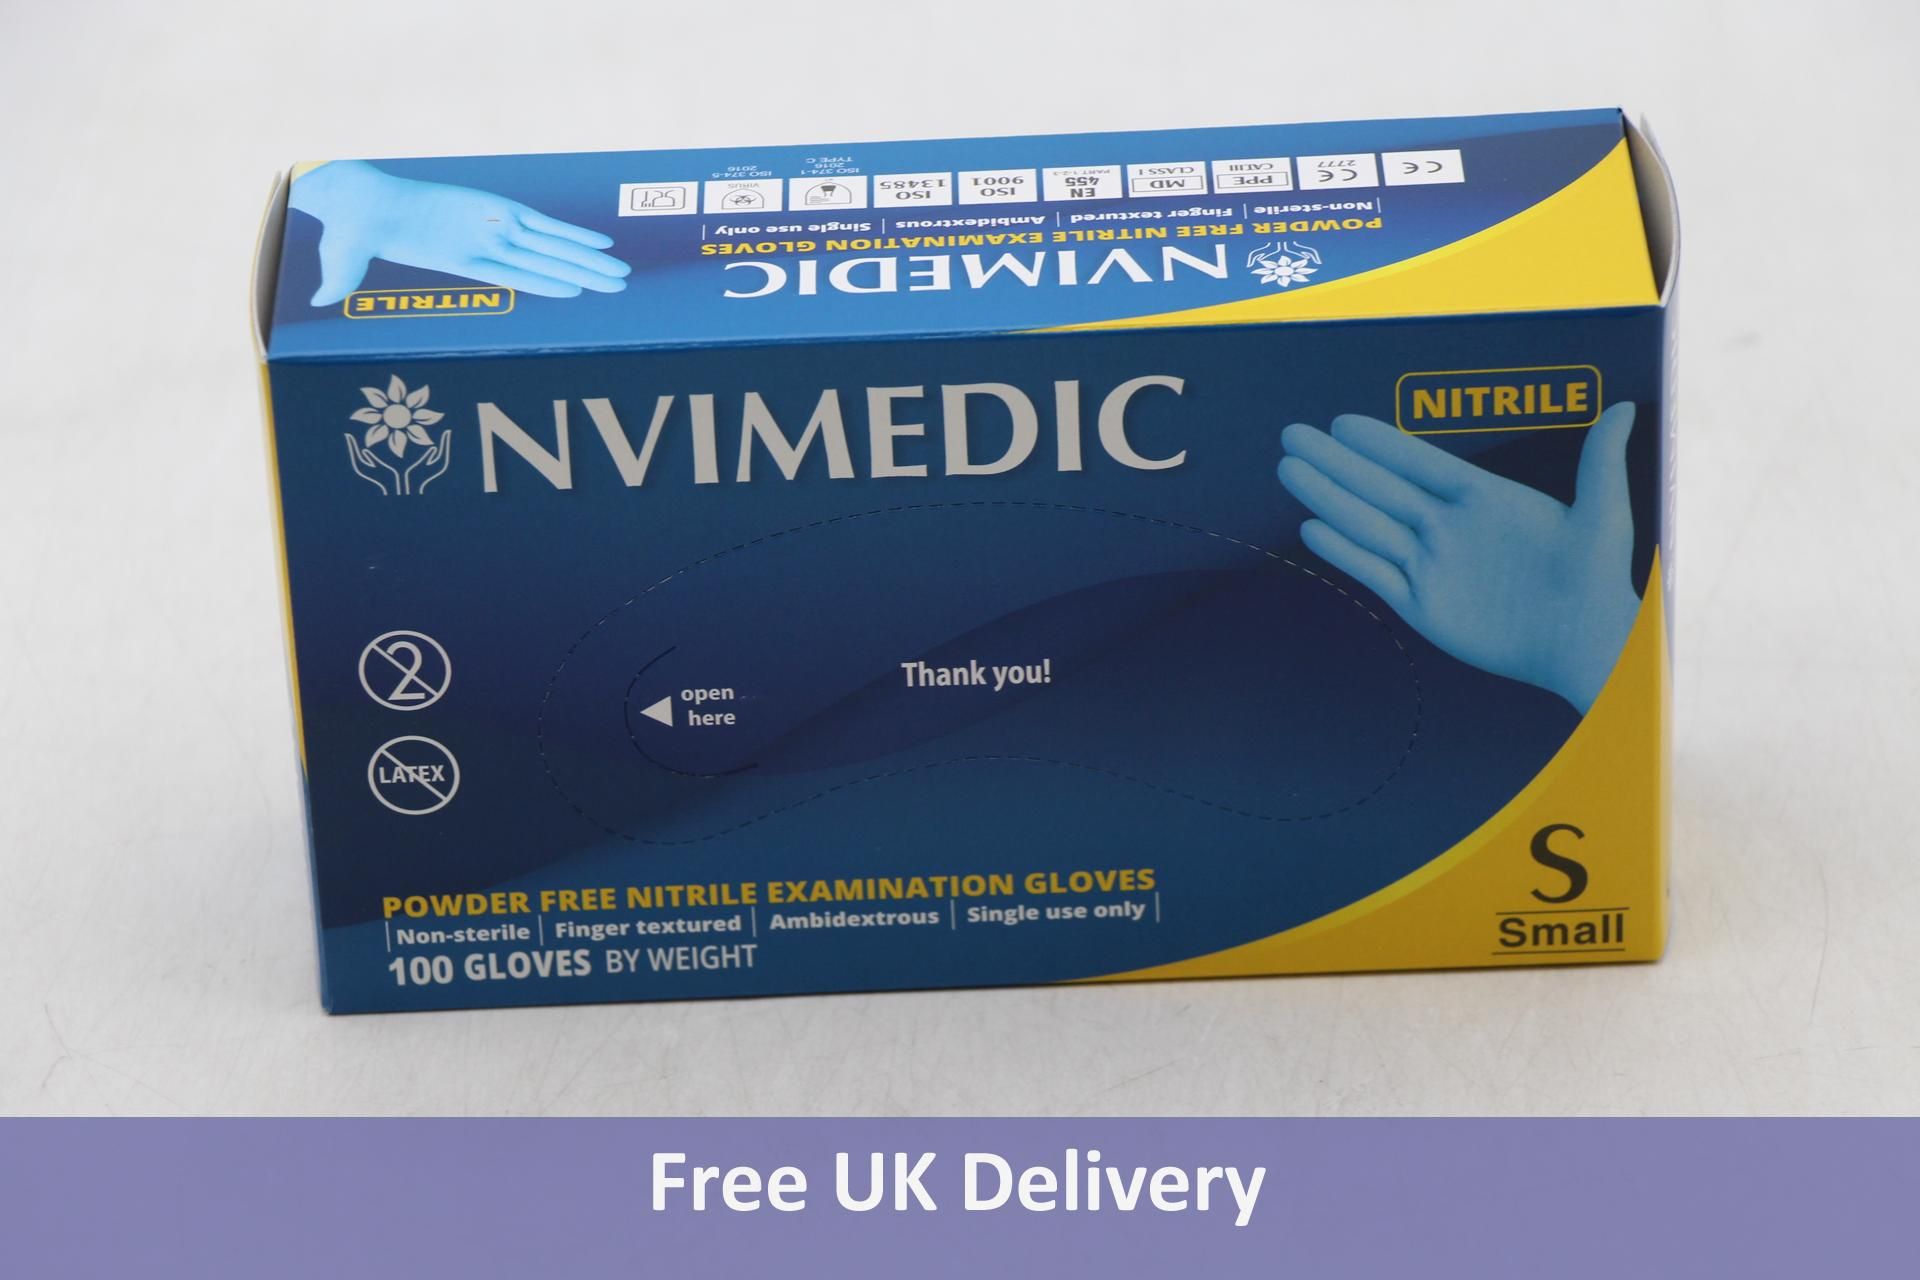 Ten Nvimedic Powder Free Nitrile Examimation Gloves, Box of 100, Size L